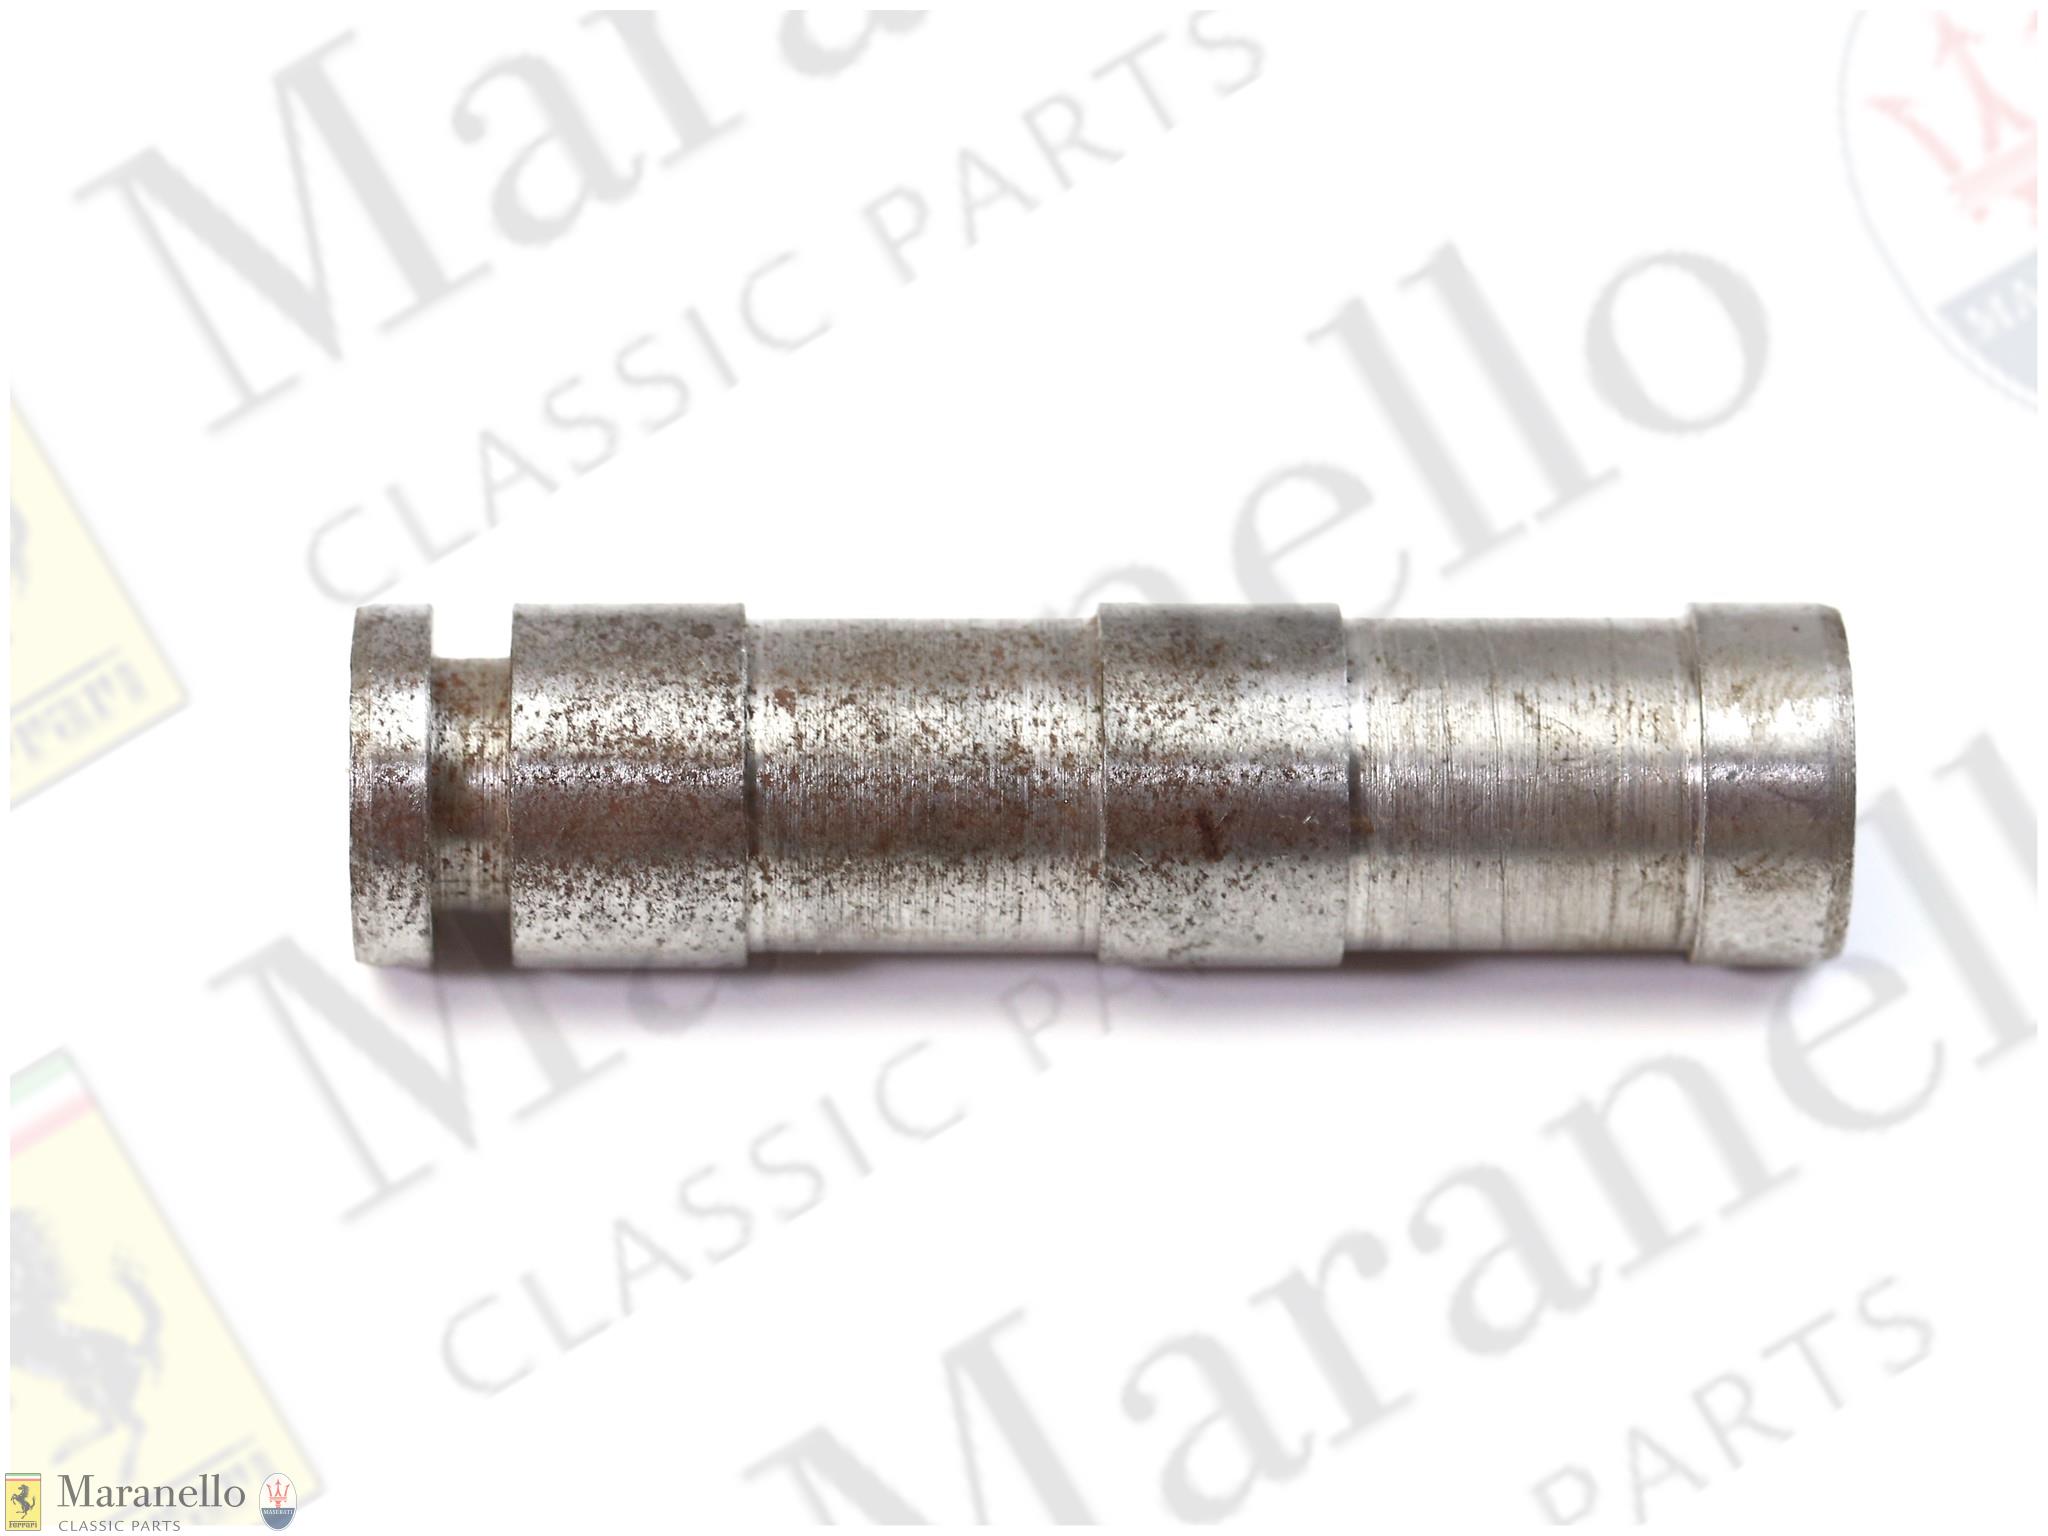 Ferrari part 220214 - Timing Gear Pin | Maranello Classic Parts